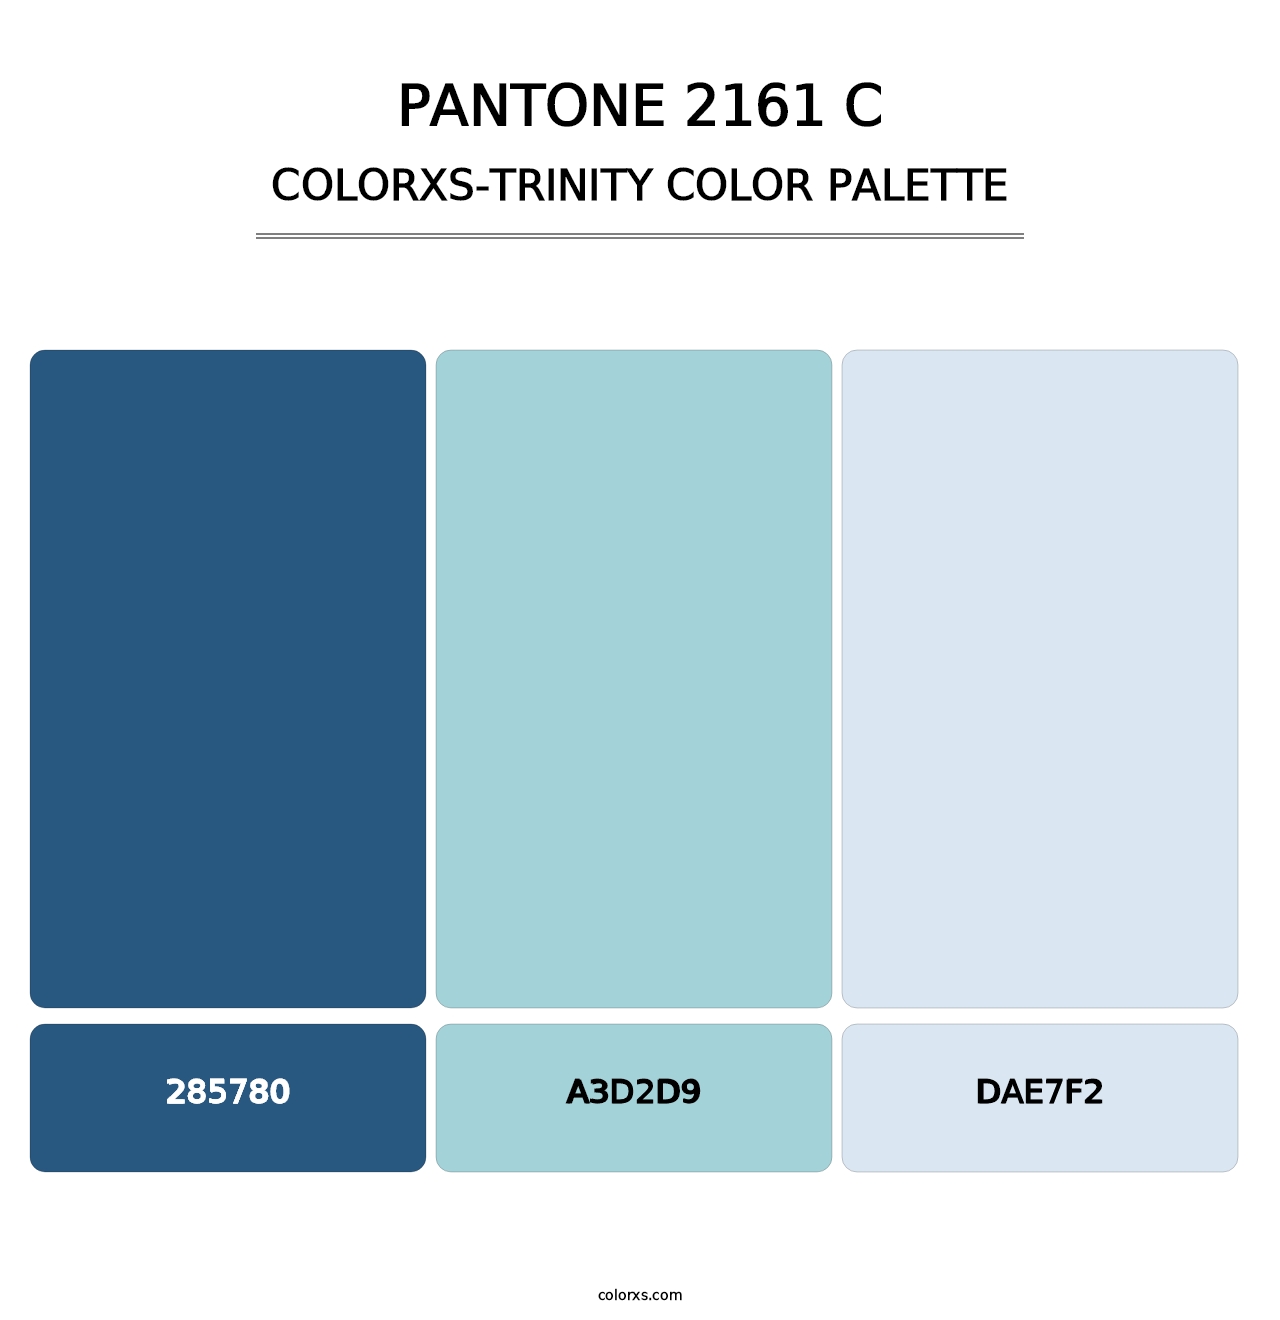 PANTONE 2161 C - Colorxs Trinity Palette